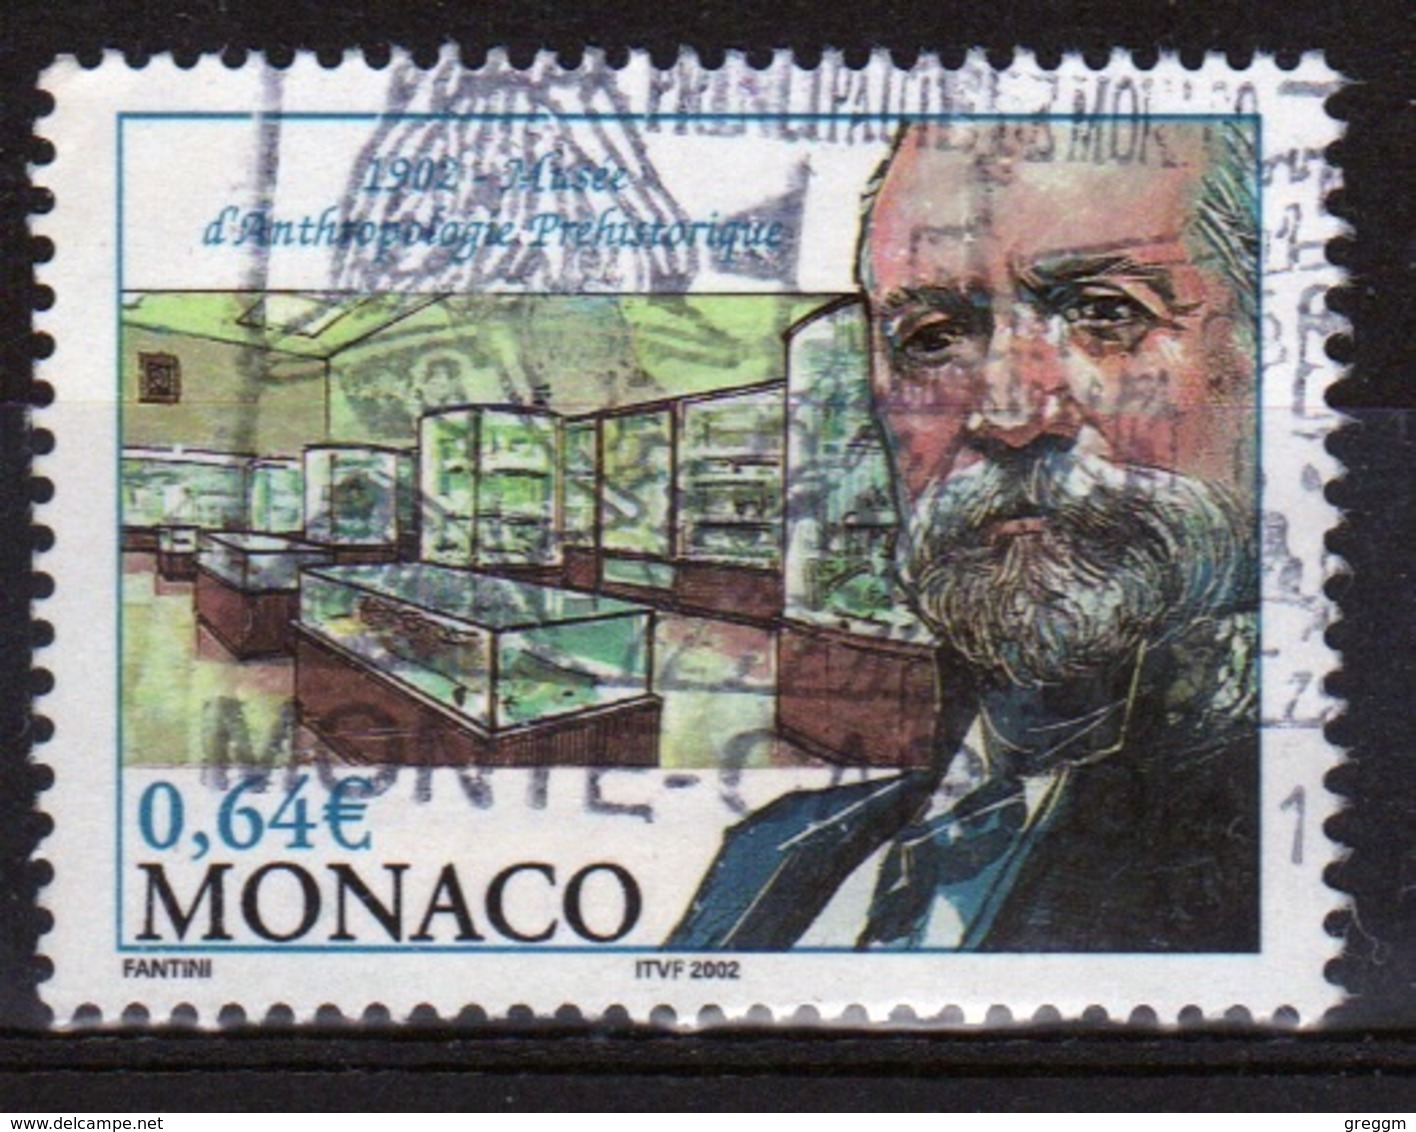 Monaco Single 64c Stamp From 2002 Set To Celebrate Anniversaries. - Usati